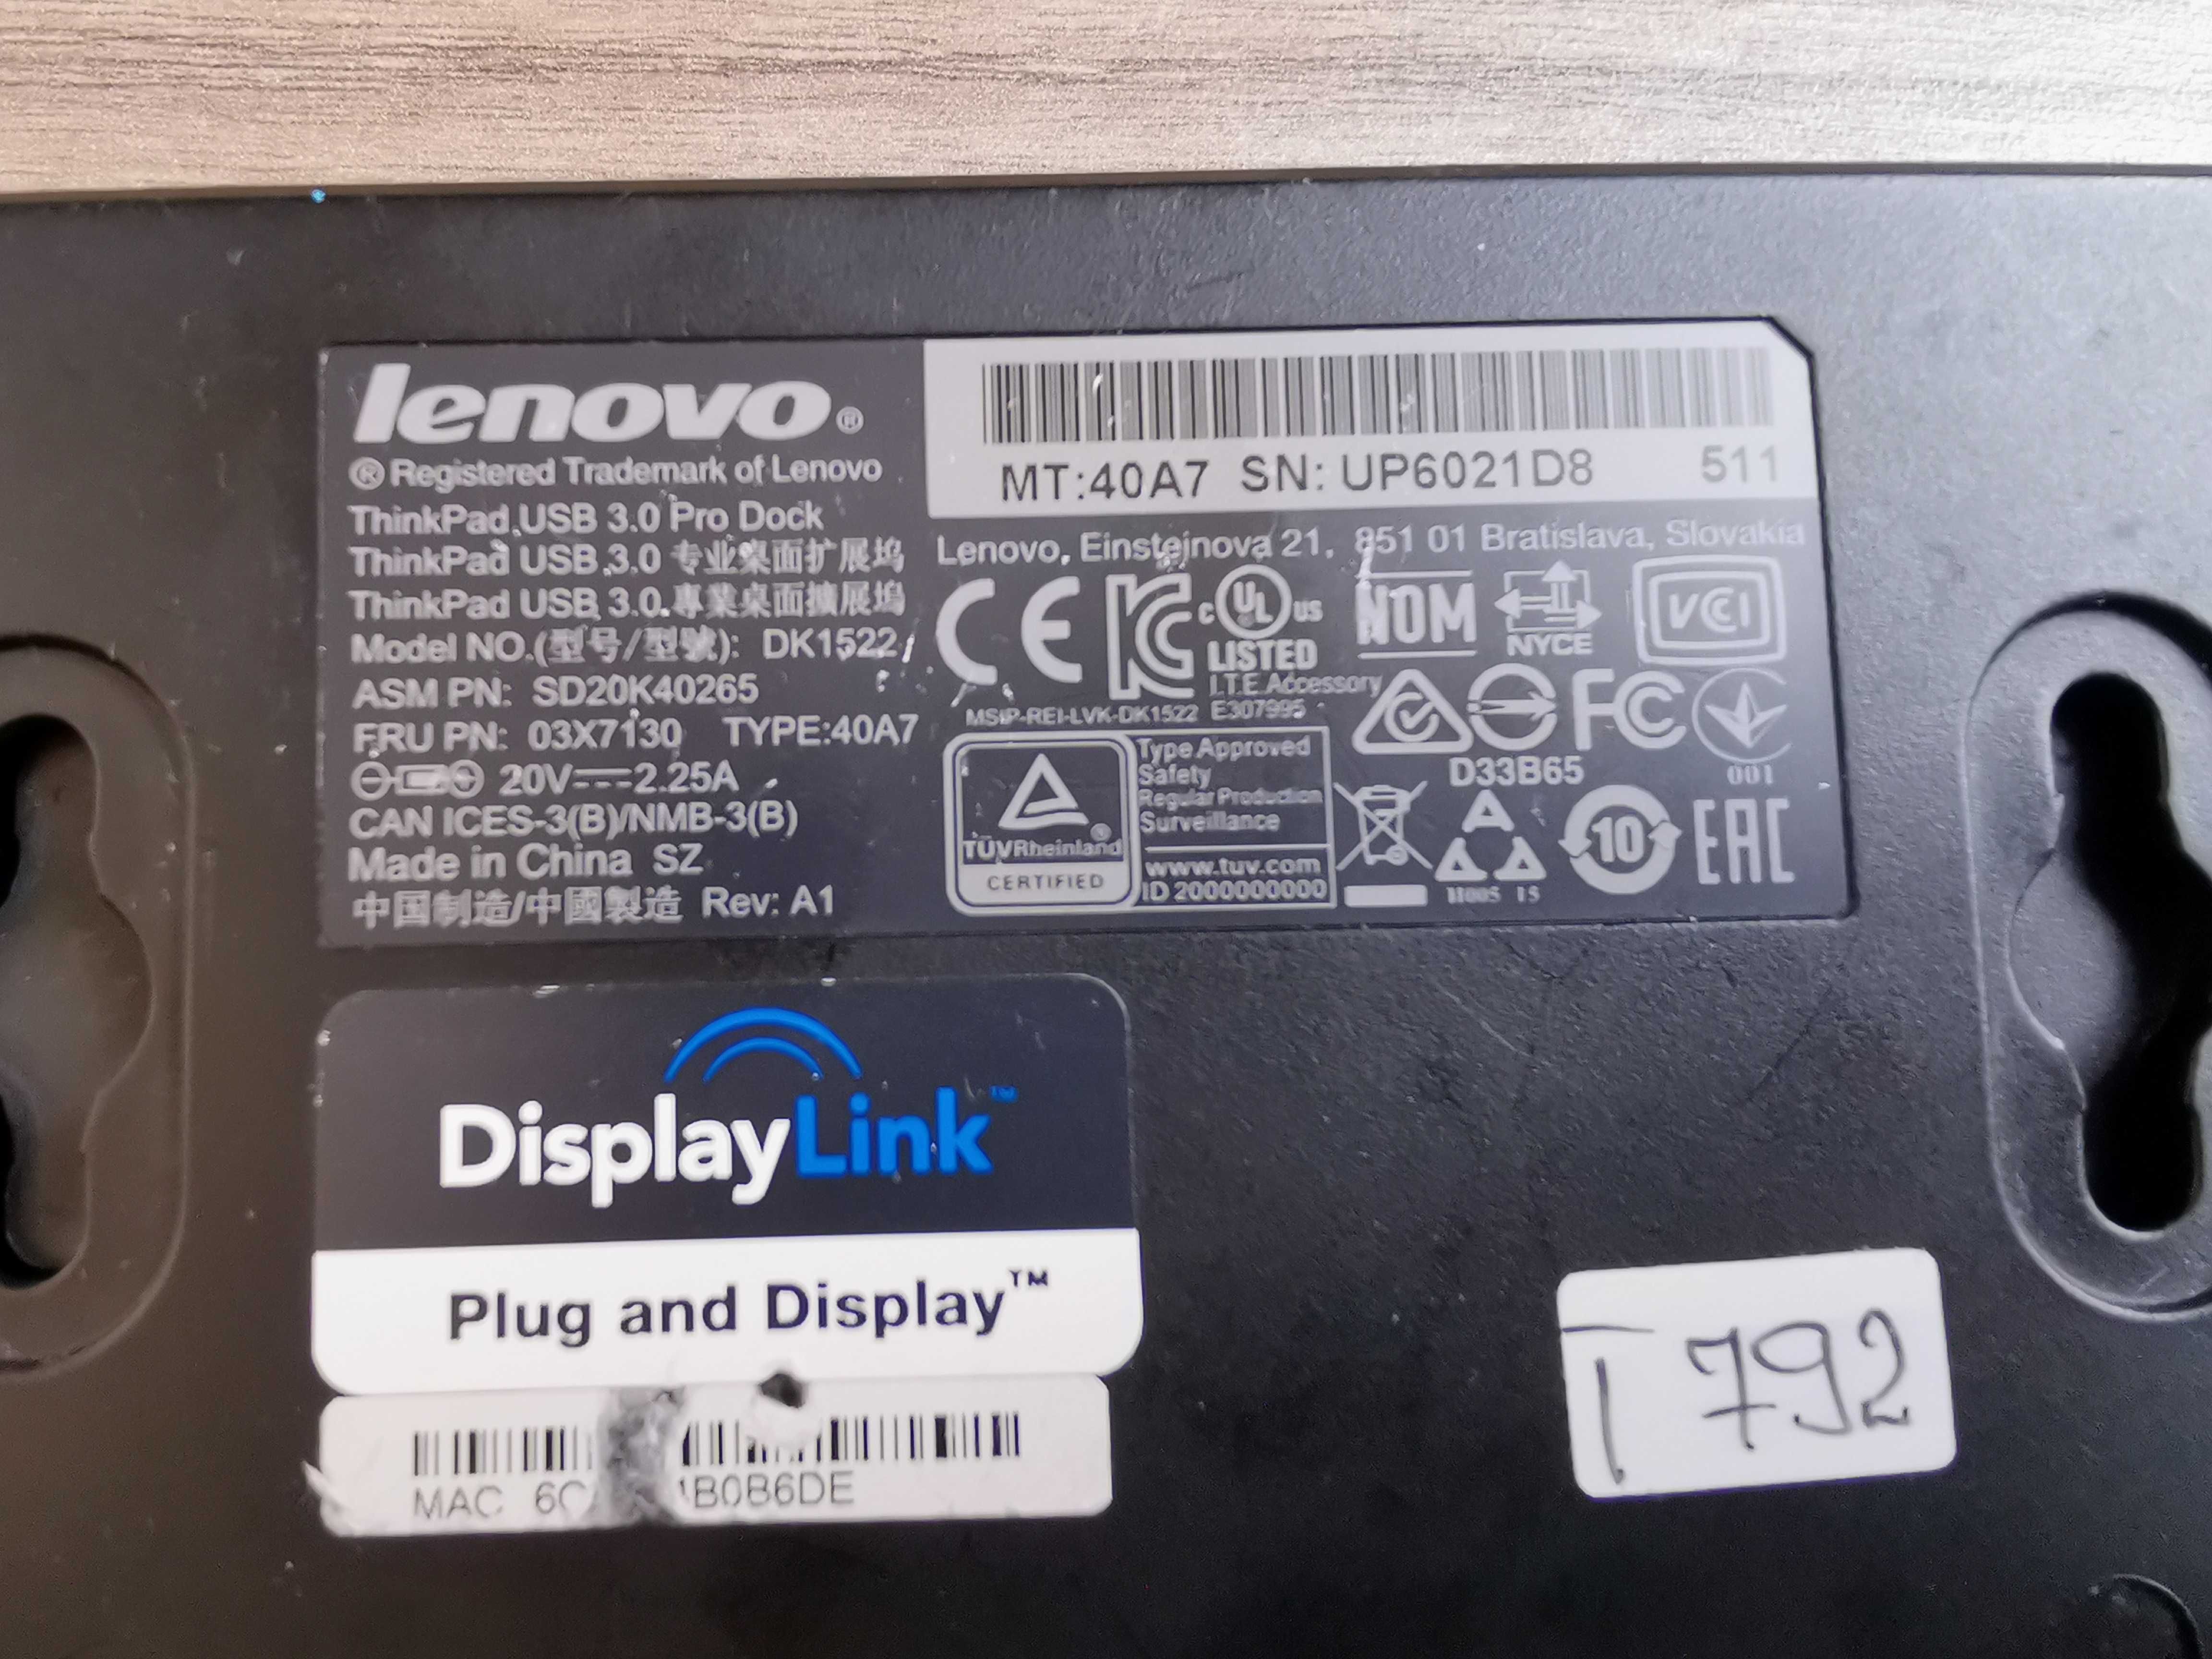 Lenovo Think Pad USB 3.0 Pro Dock fuctional Model DK1522